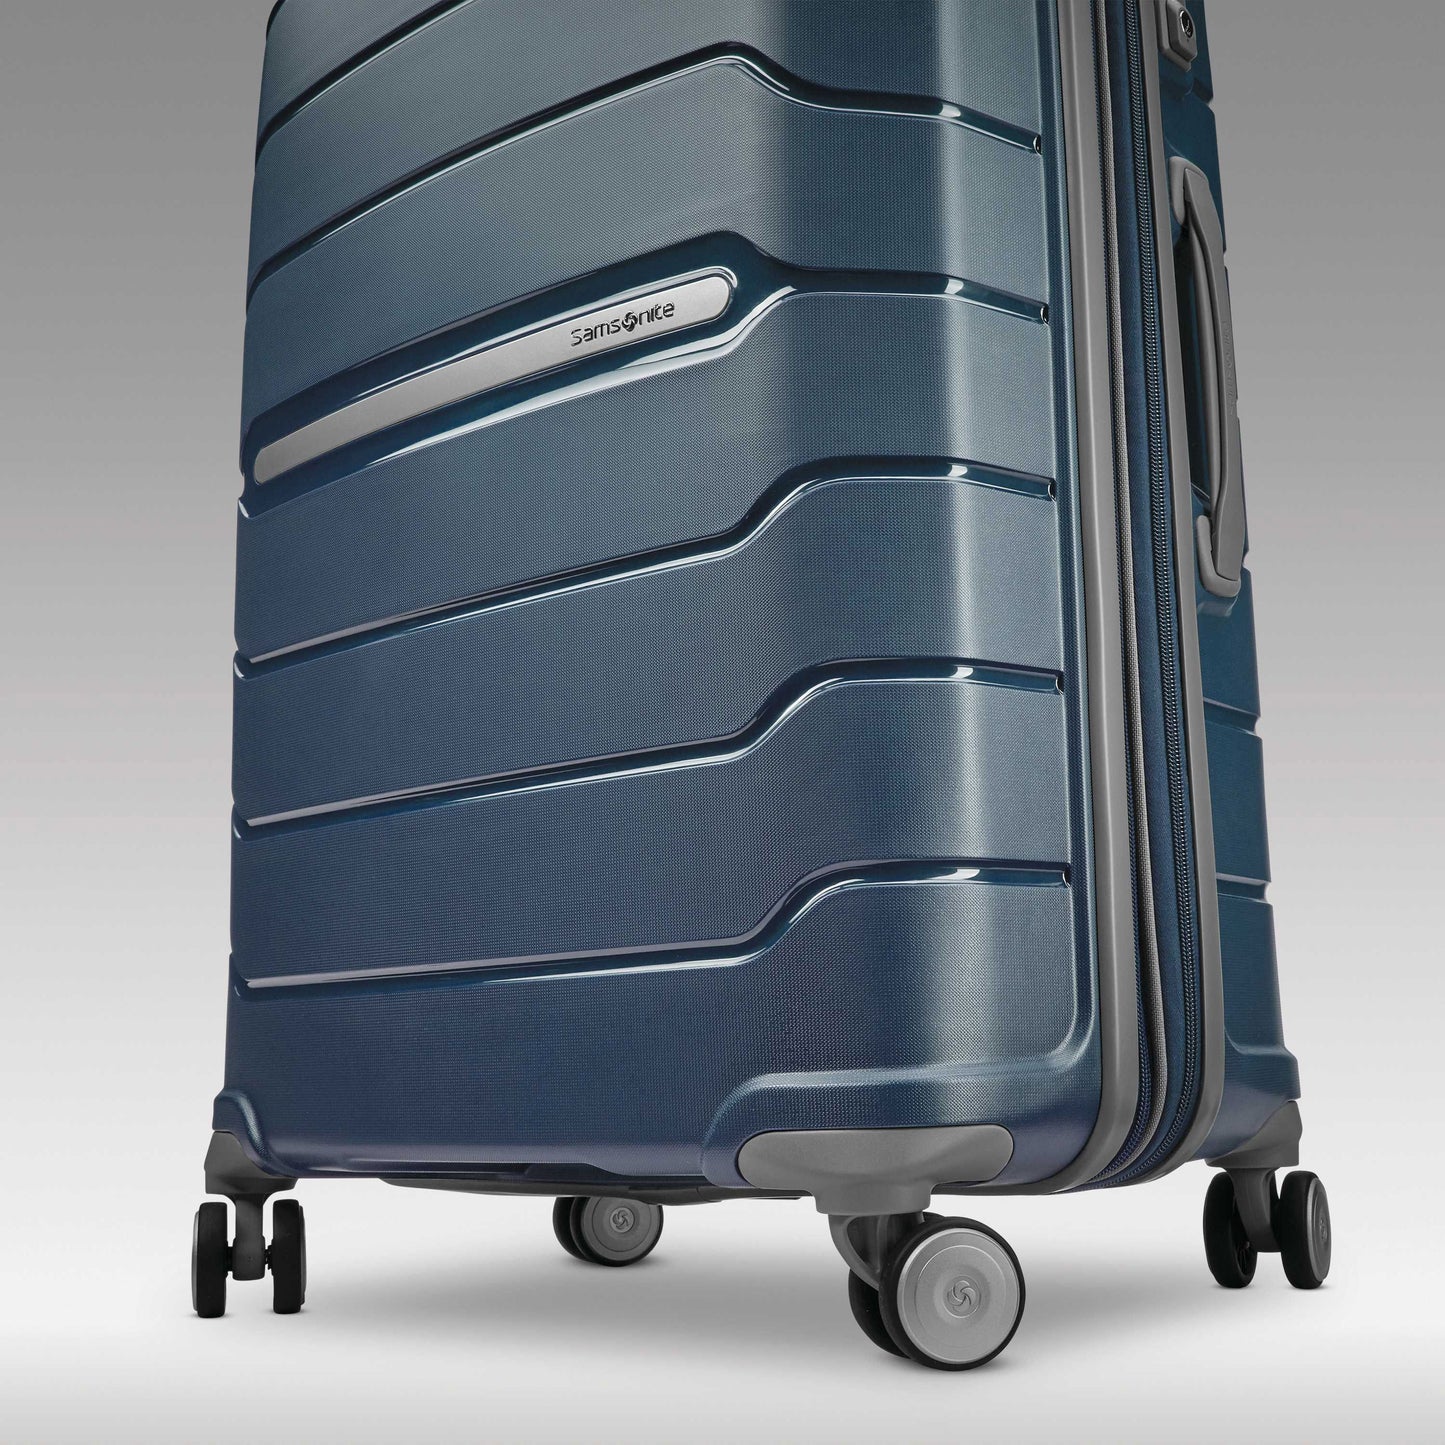 Samsonite Freeform Hardside Luggage (LARGE)